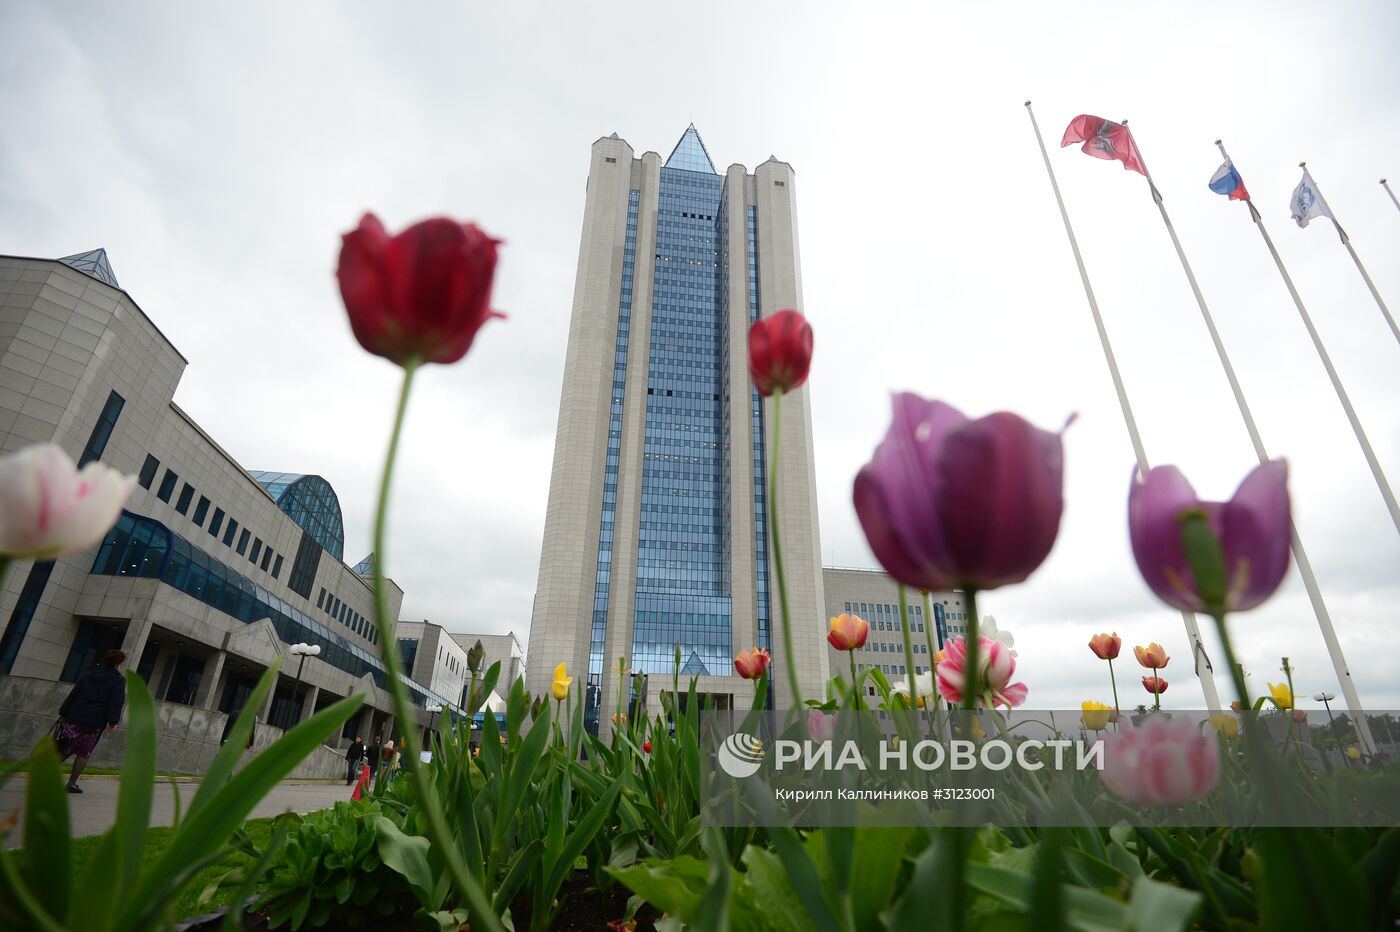 Офис ОАО "Газпром" в Москве